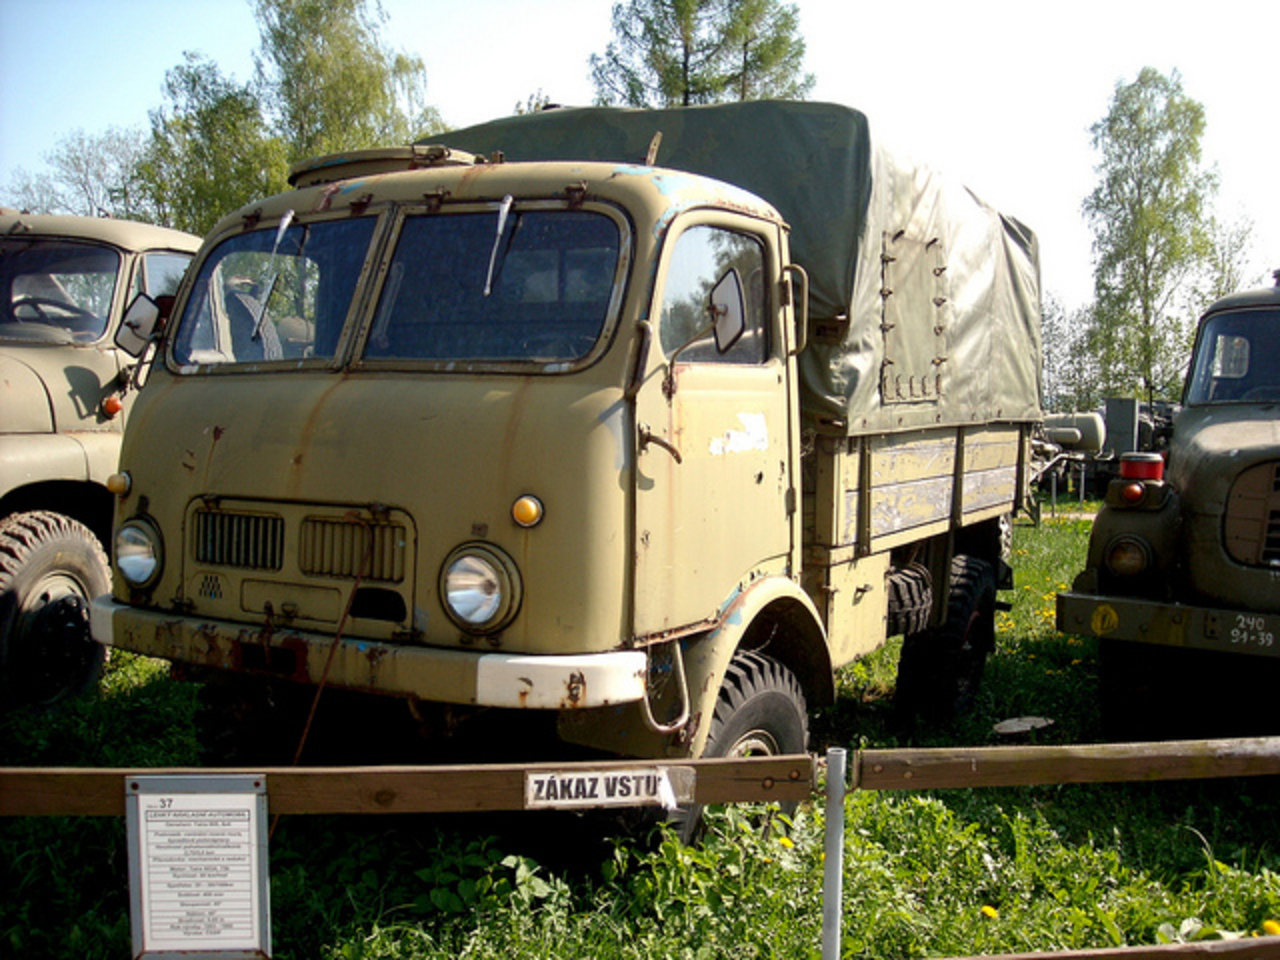 Tatra 805 military truck | Flickr - Photo Sharing!